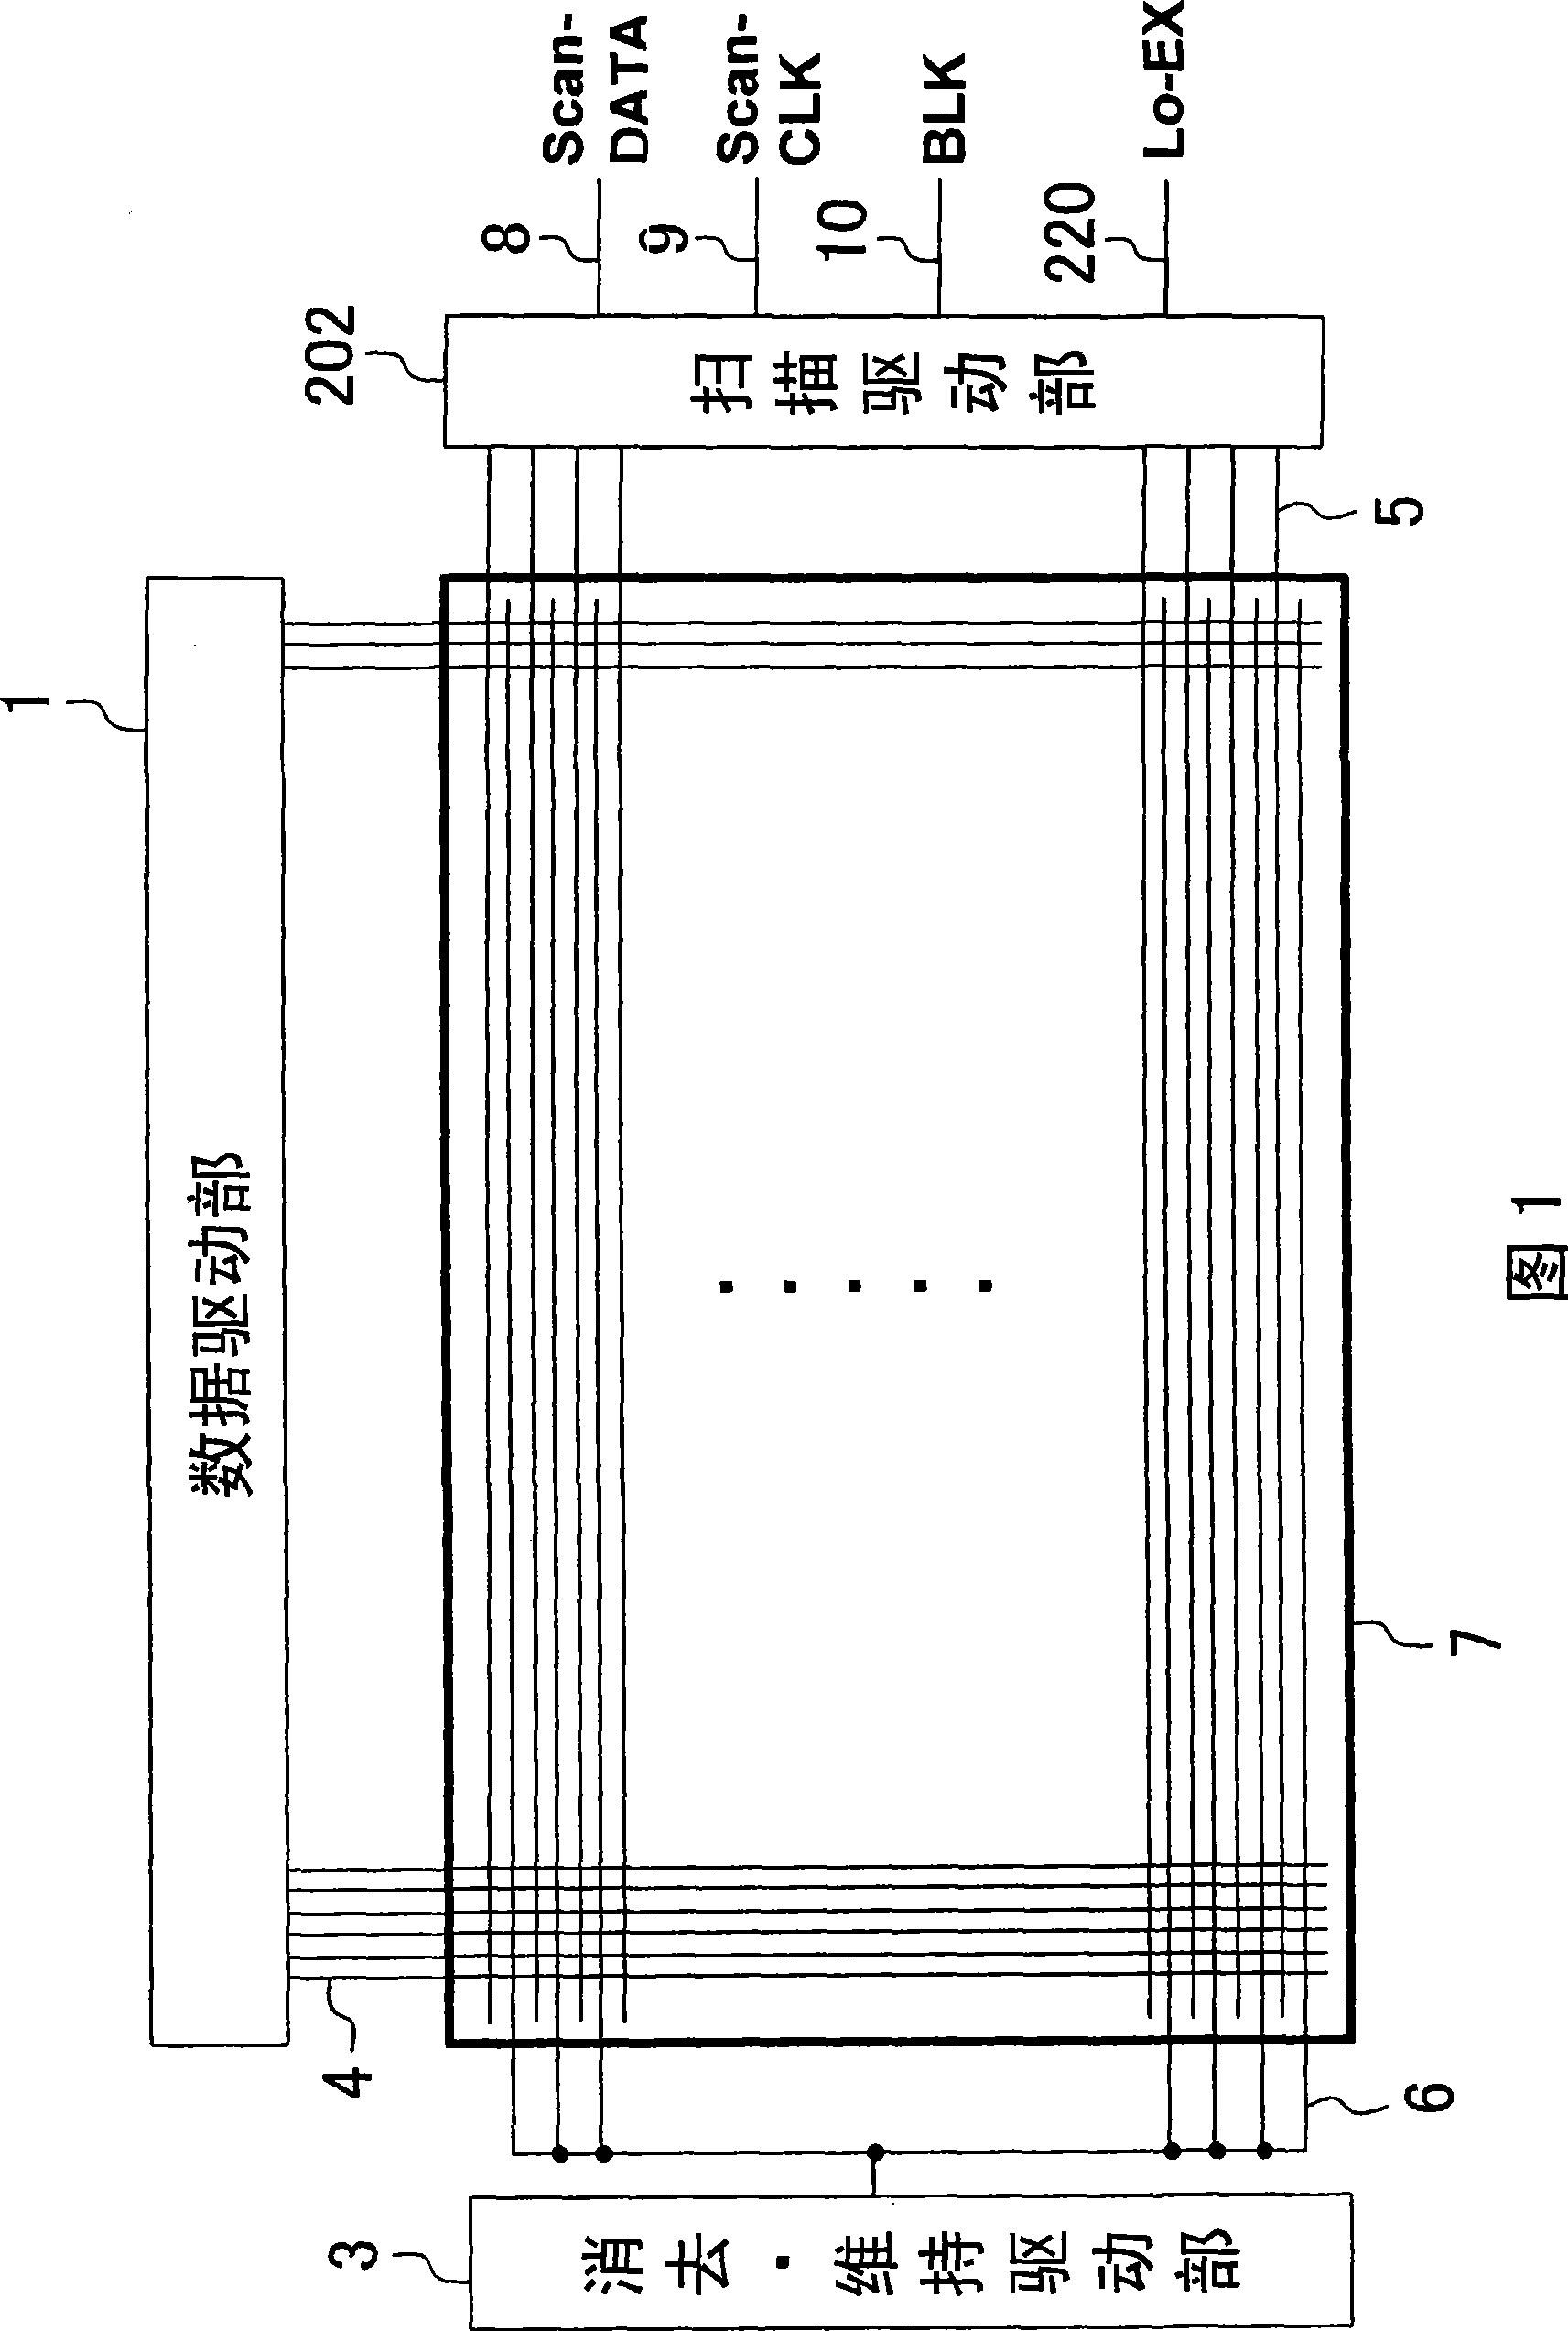 Capacitive load driving circuit and plasma display panel